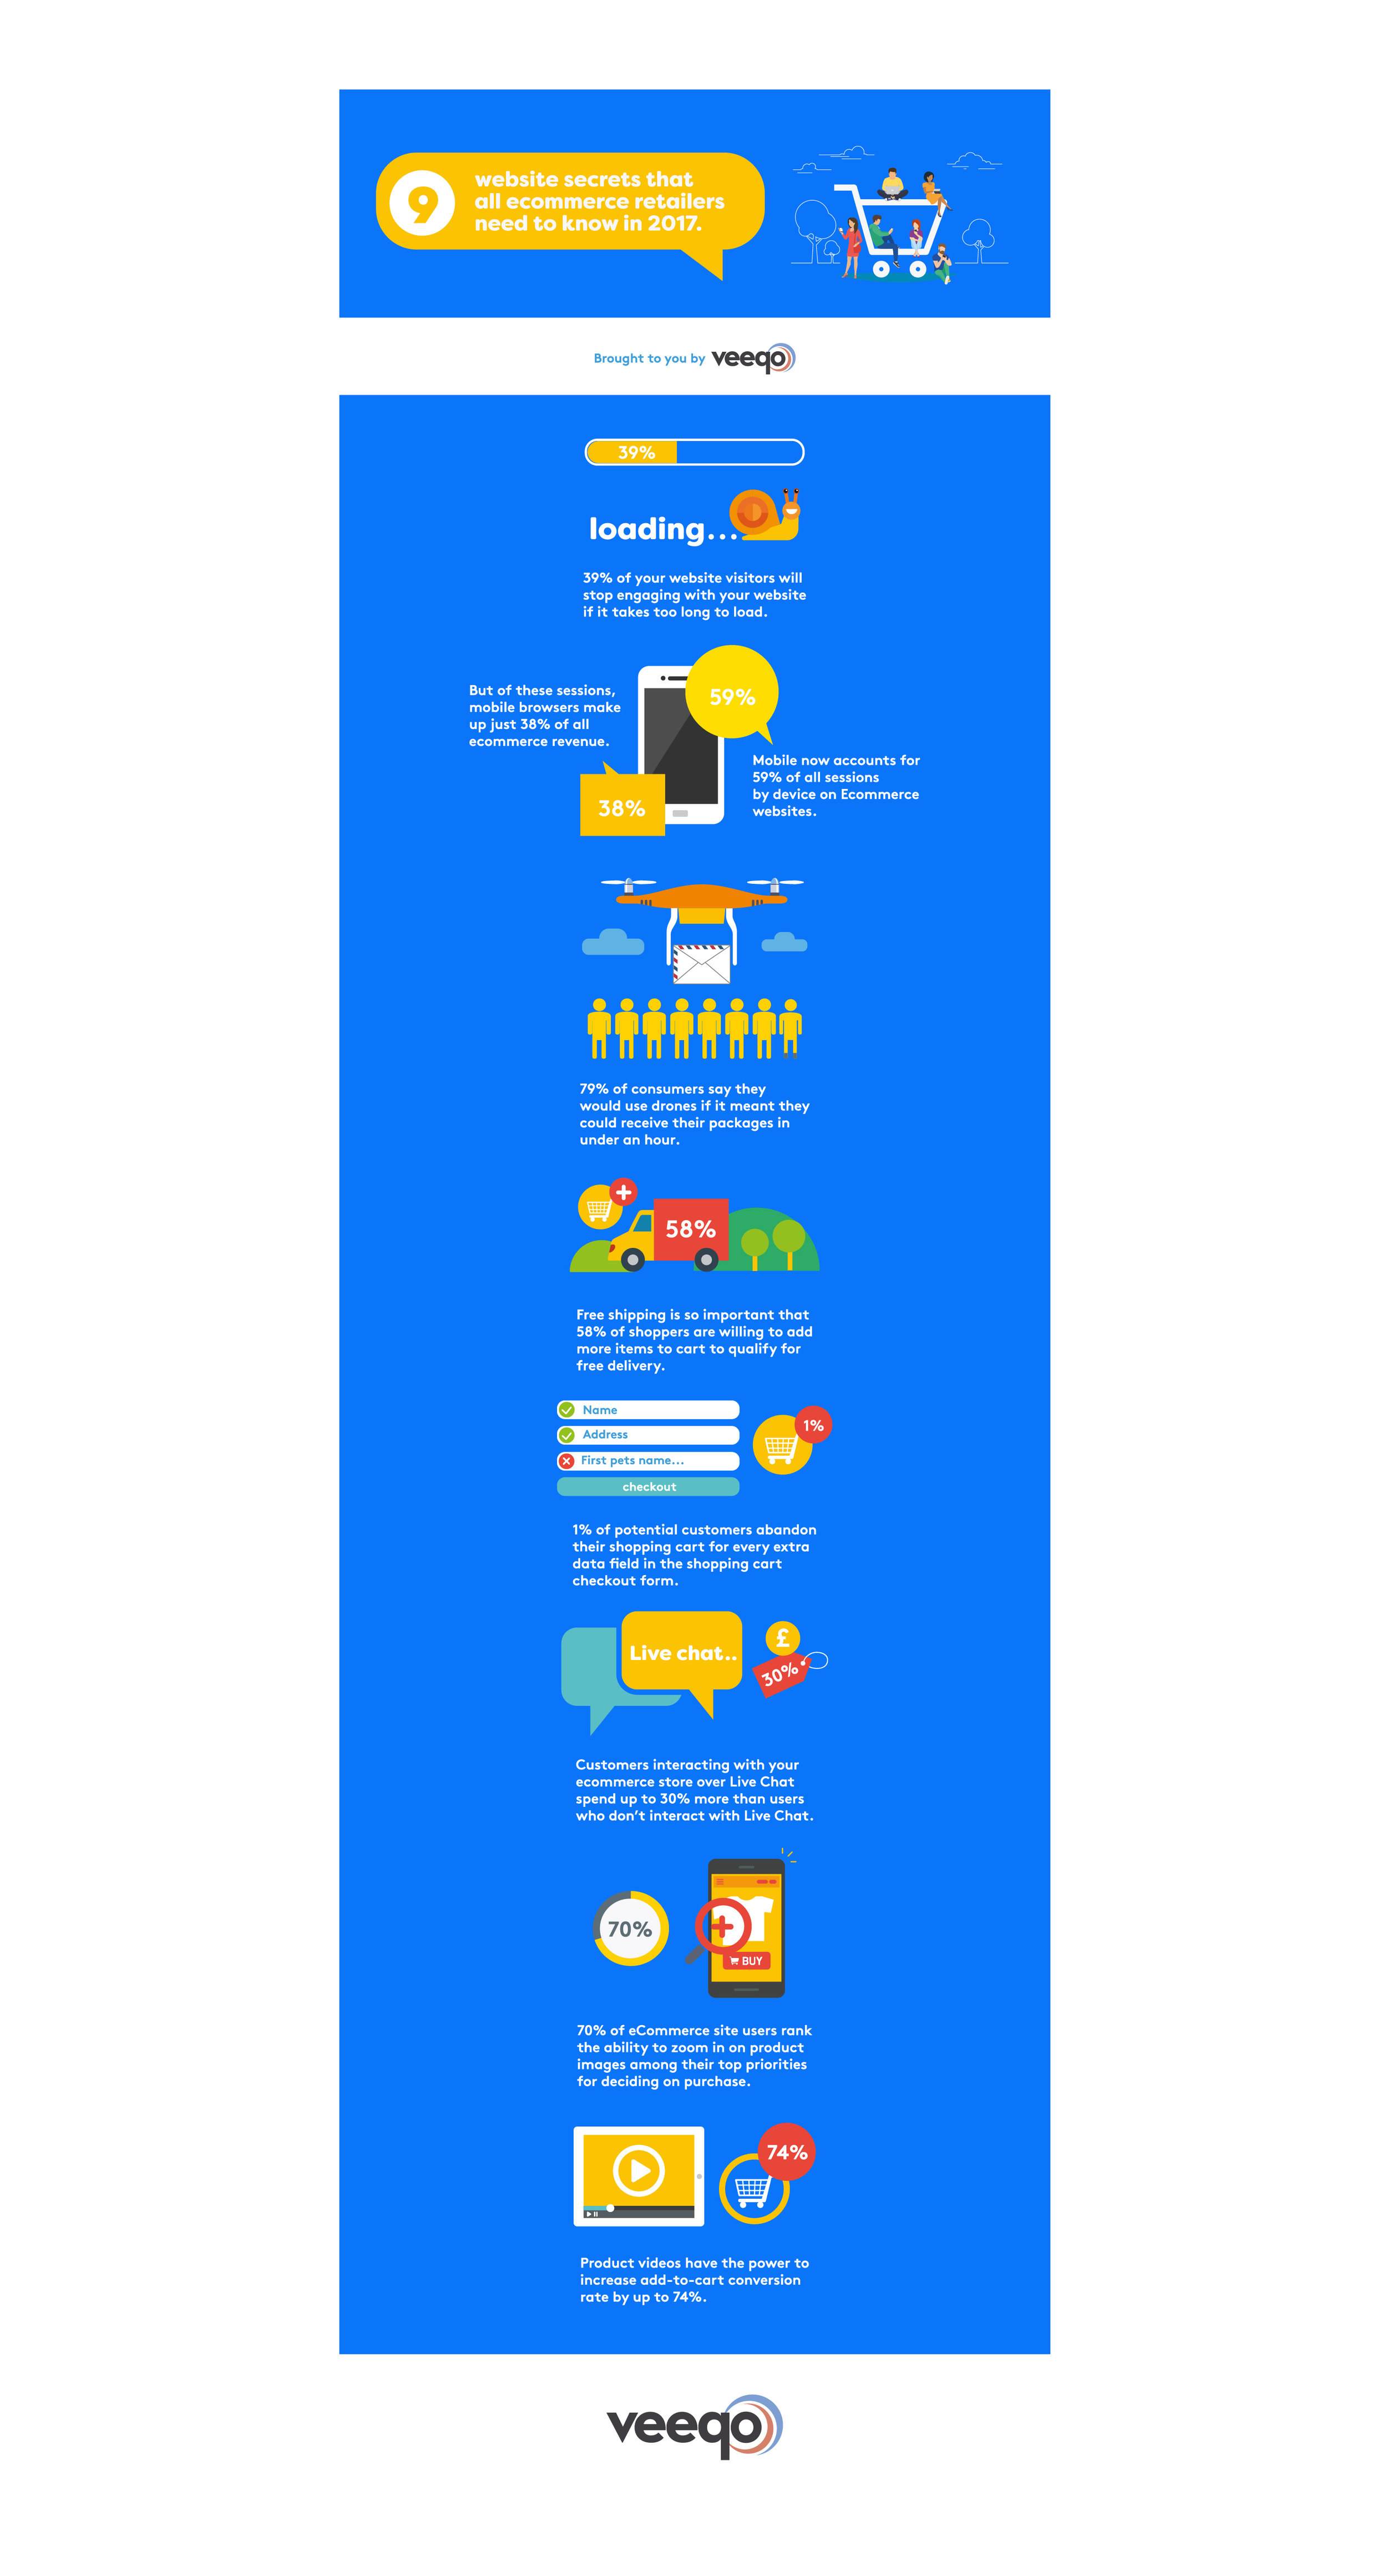 Branding Design - Veeqo e-commerce infographic design in blue background 